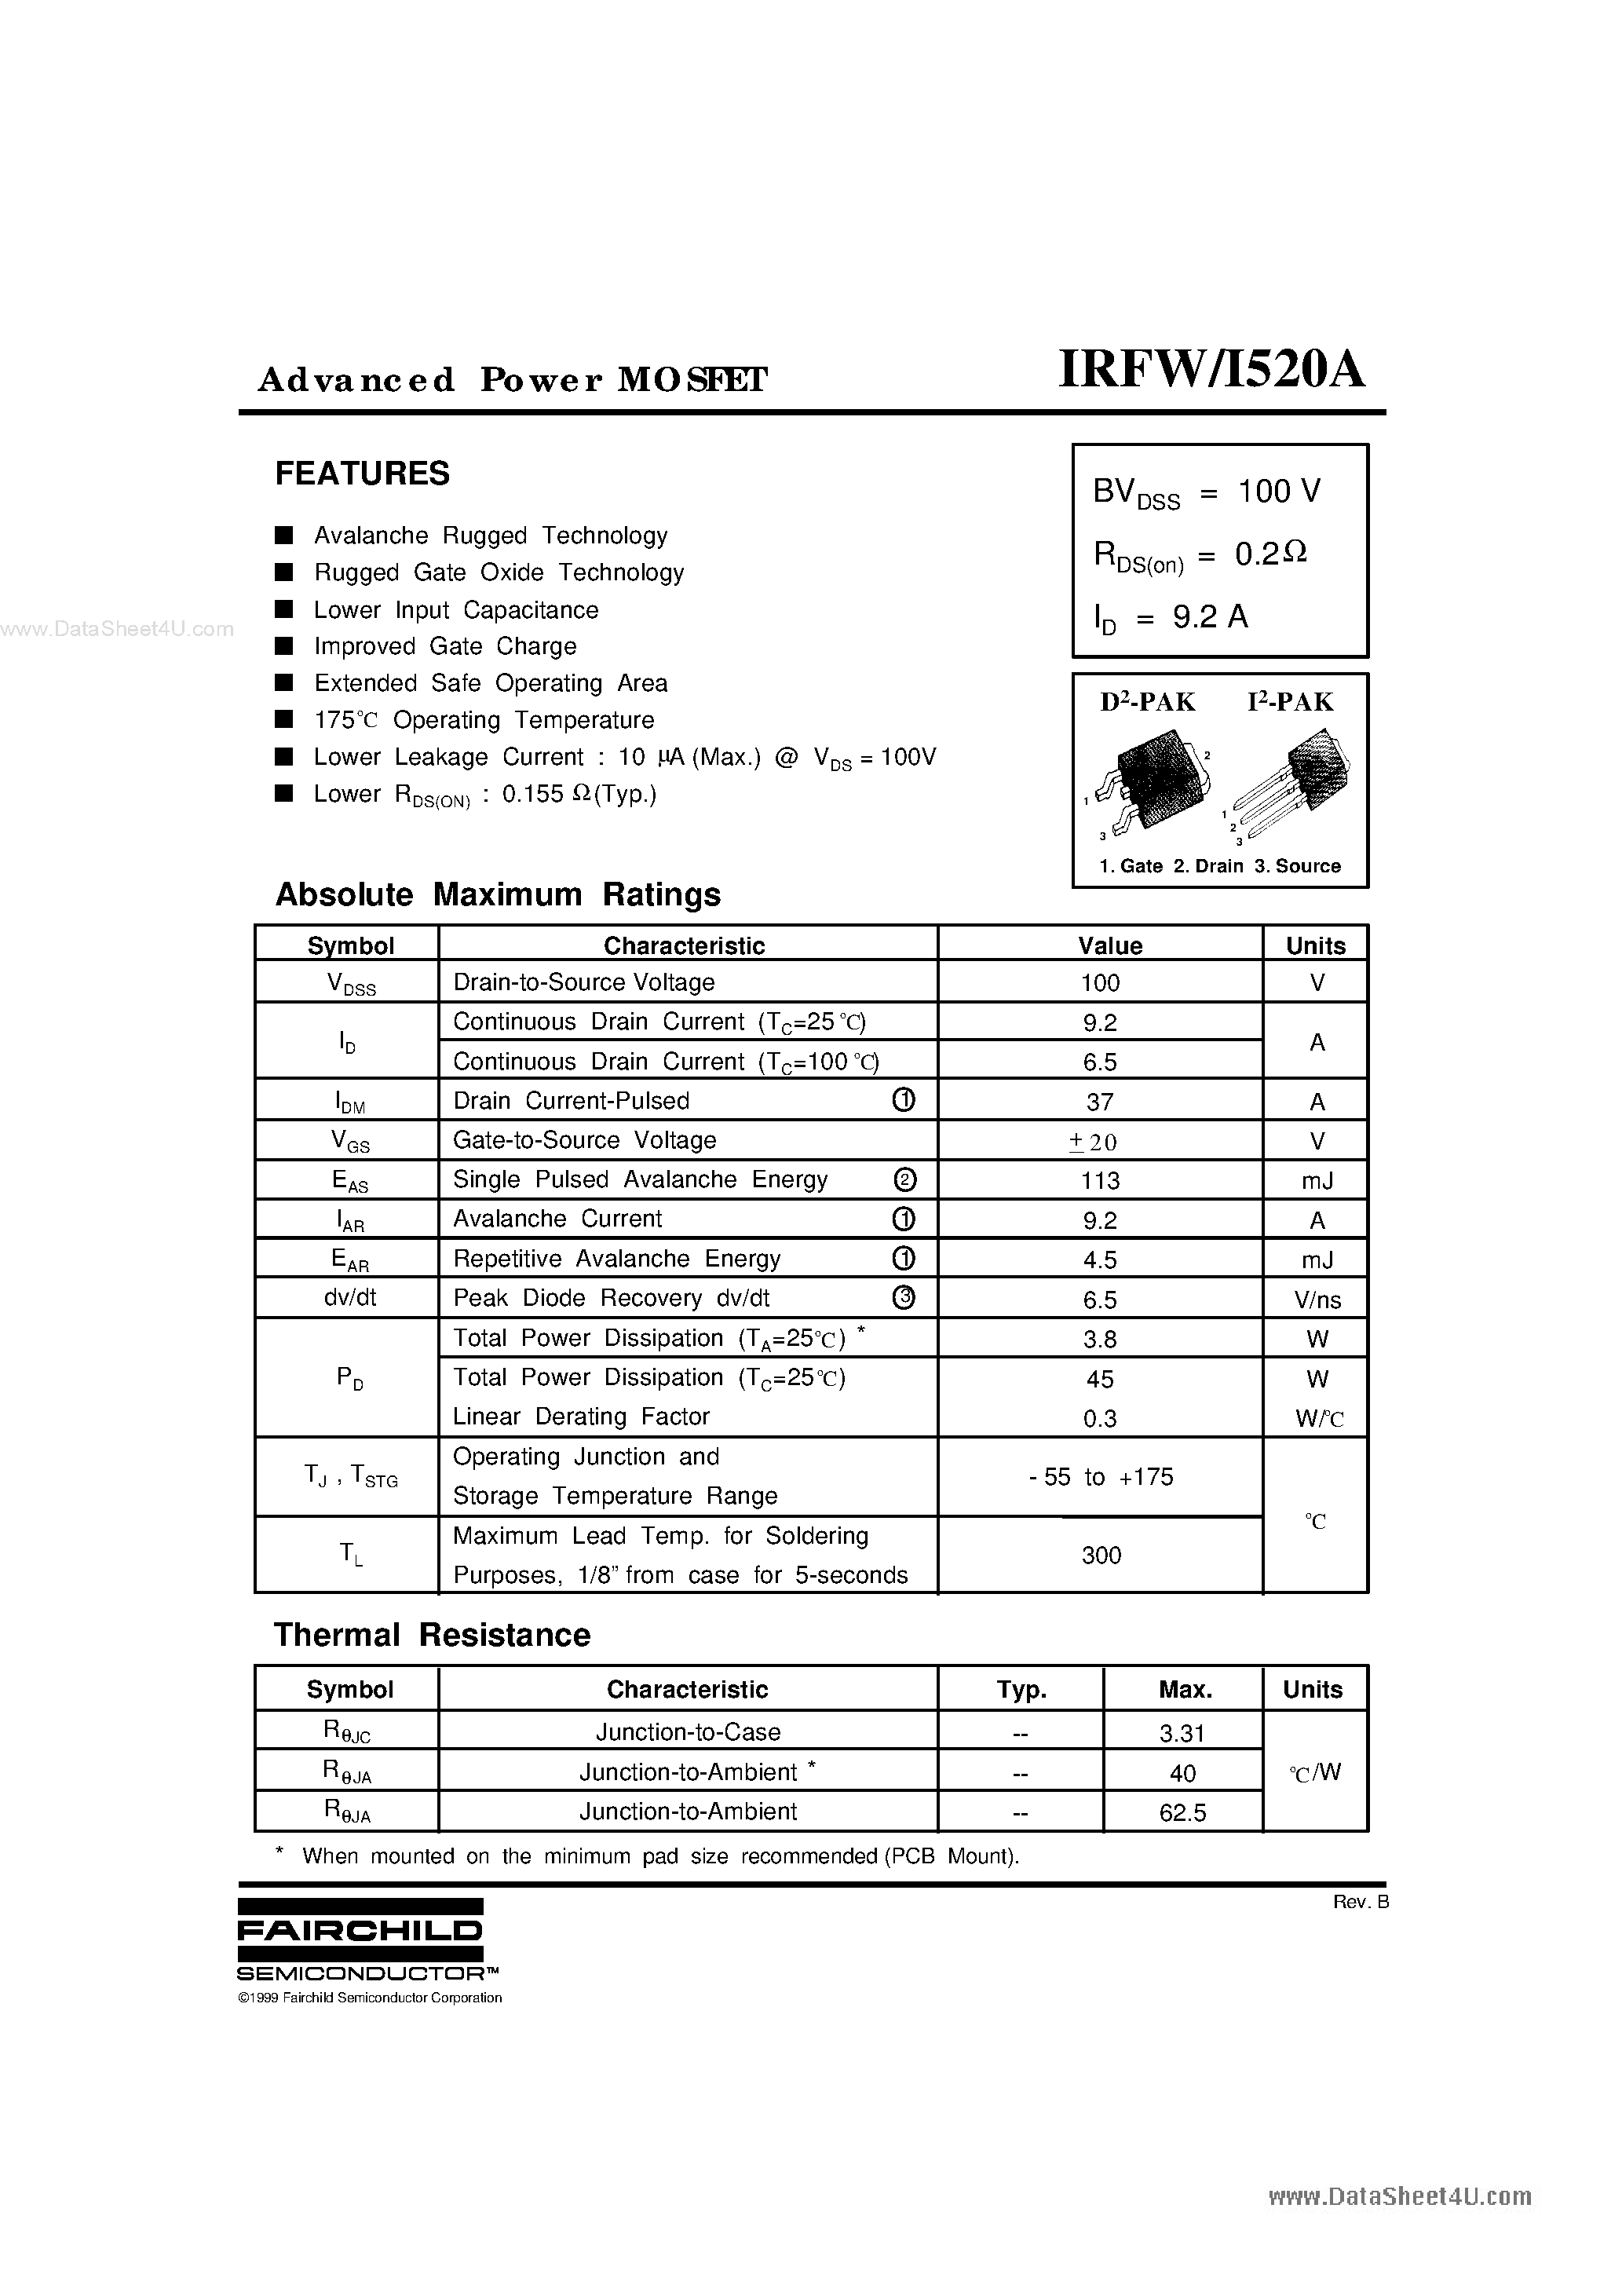 Datasheet IRFI520A - Advanced Power MOSFET page 1